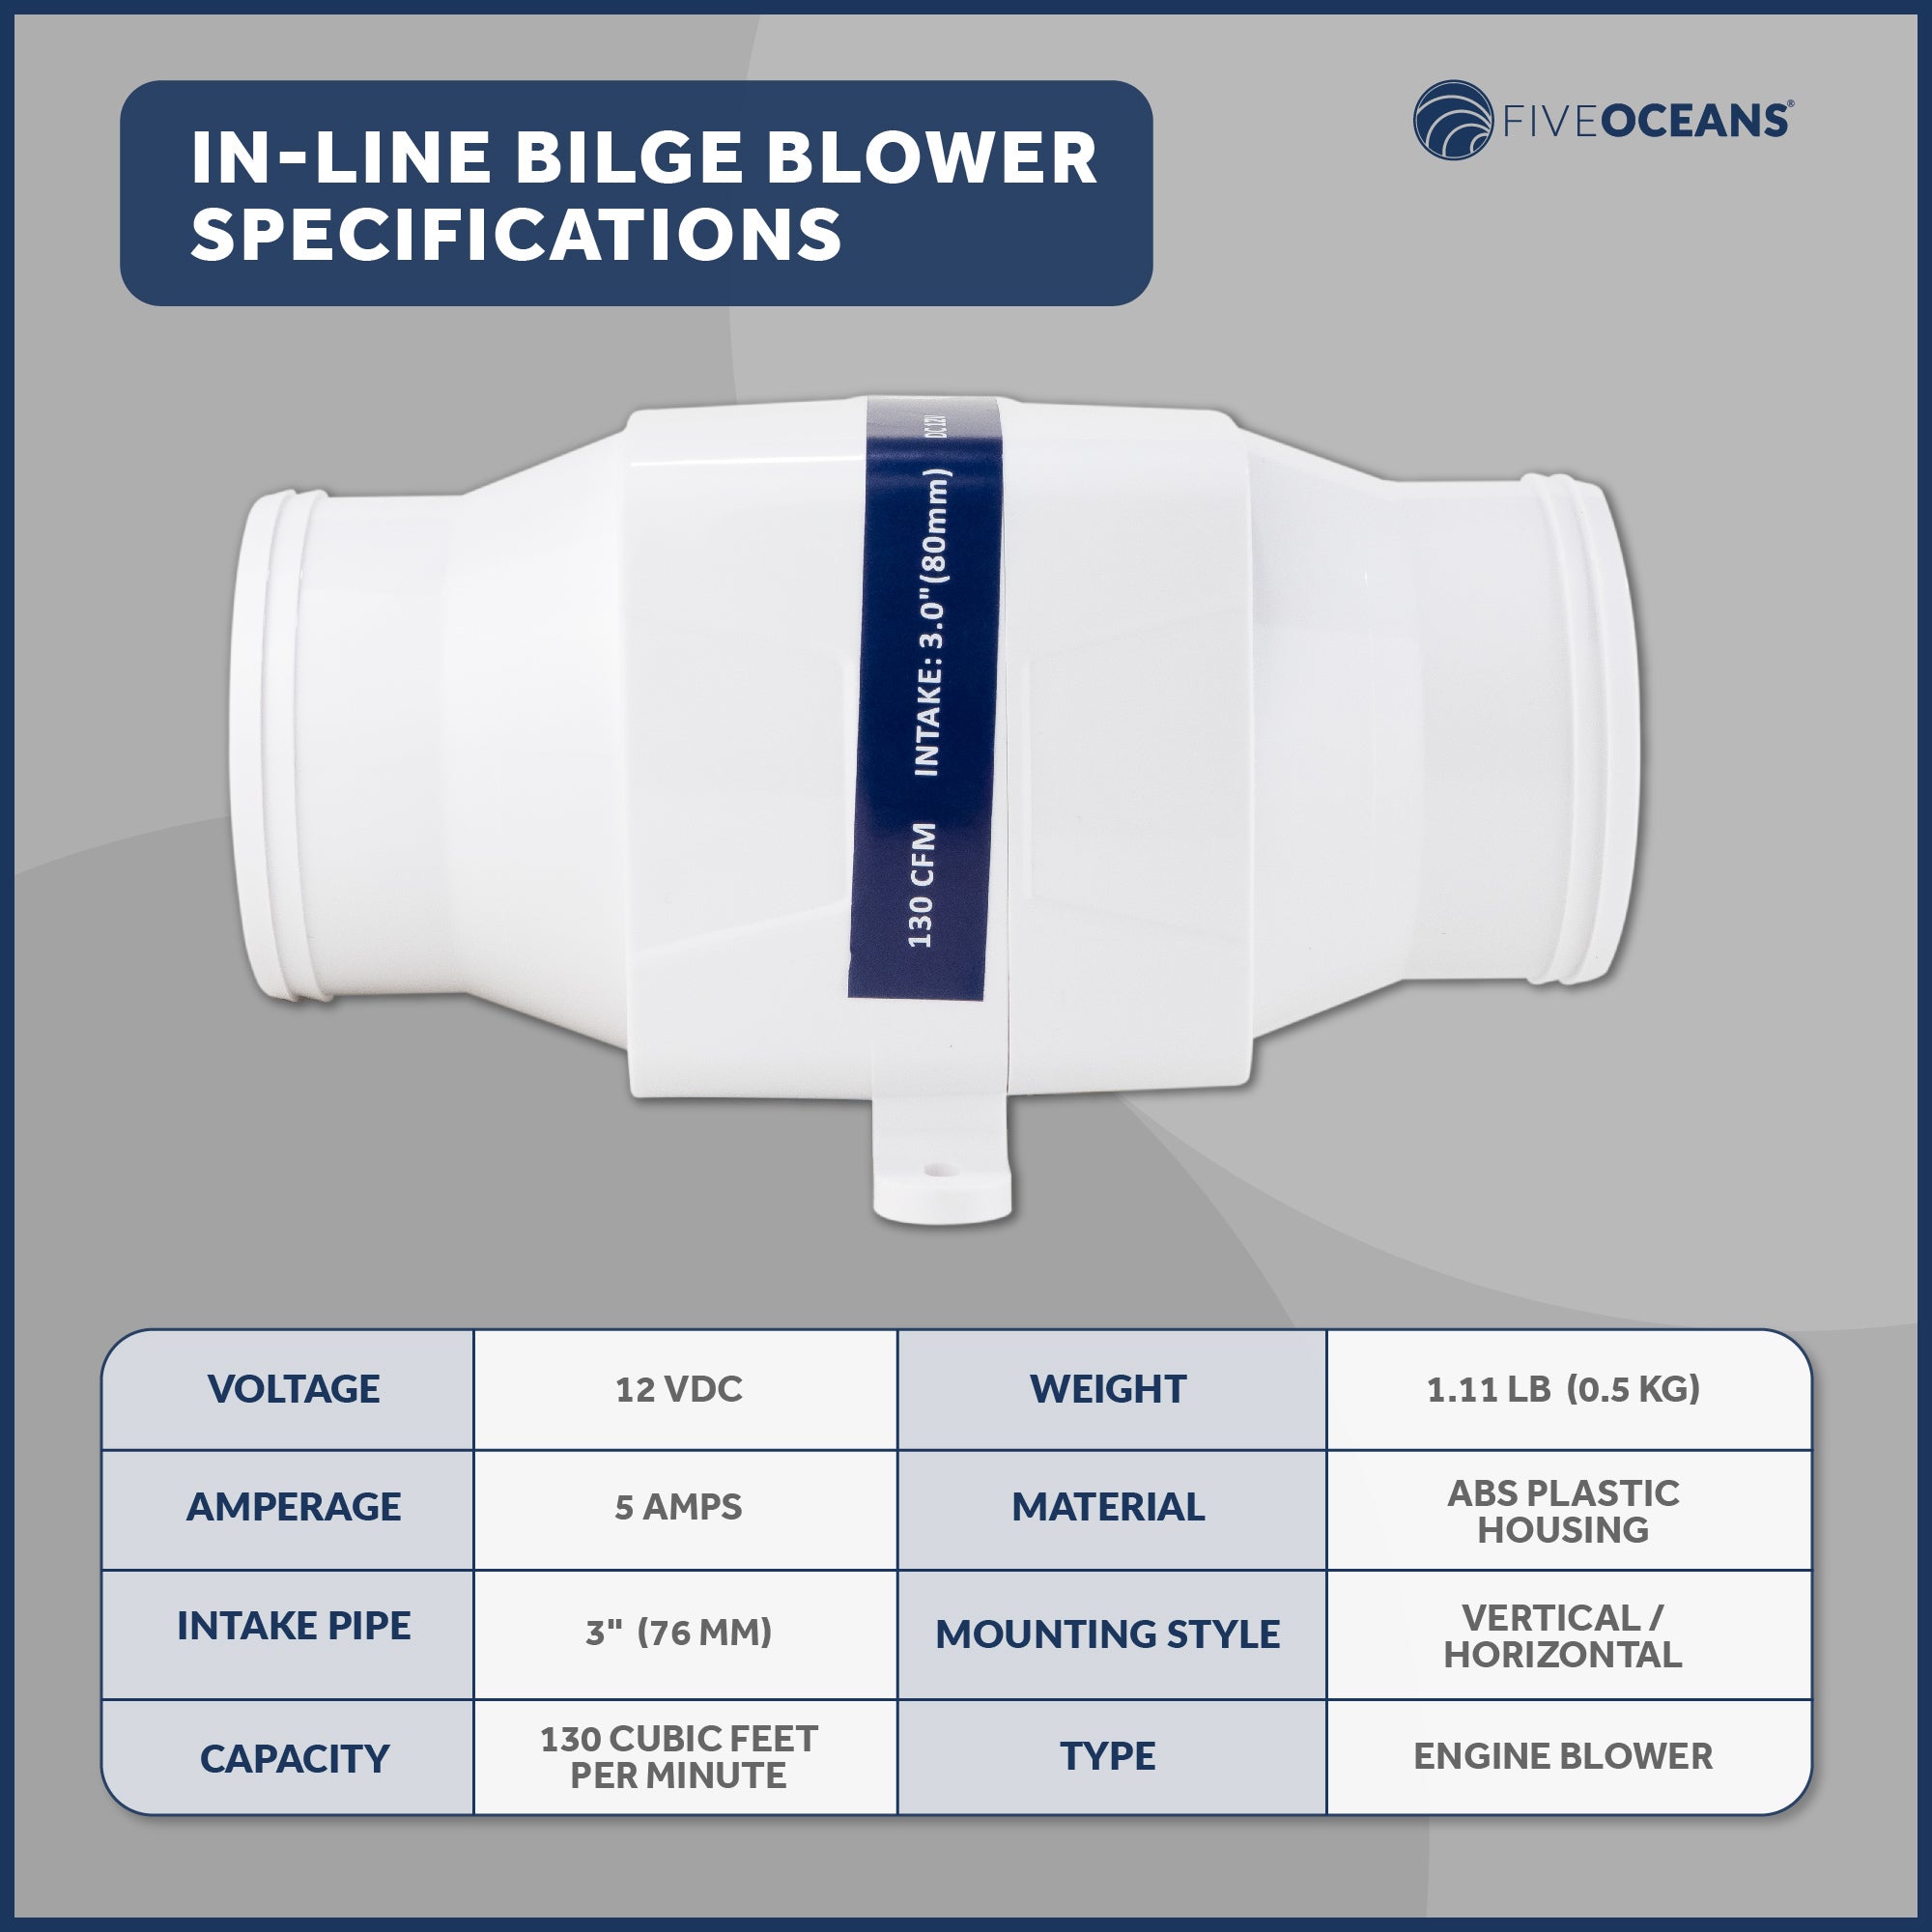 In-Line Bilge Blower, for 3" Interior Diameter Vent, Water Resistant, 12V - FO4333